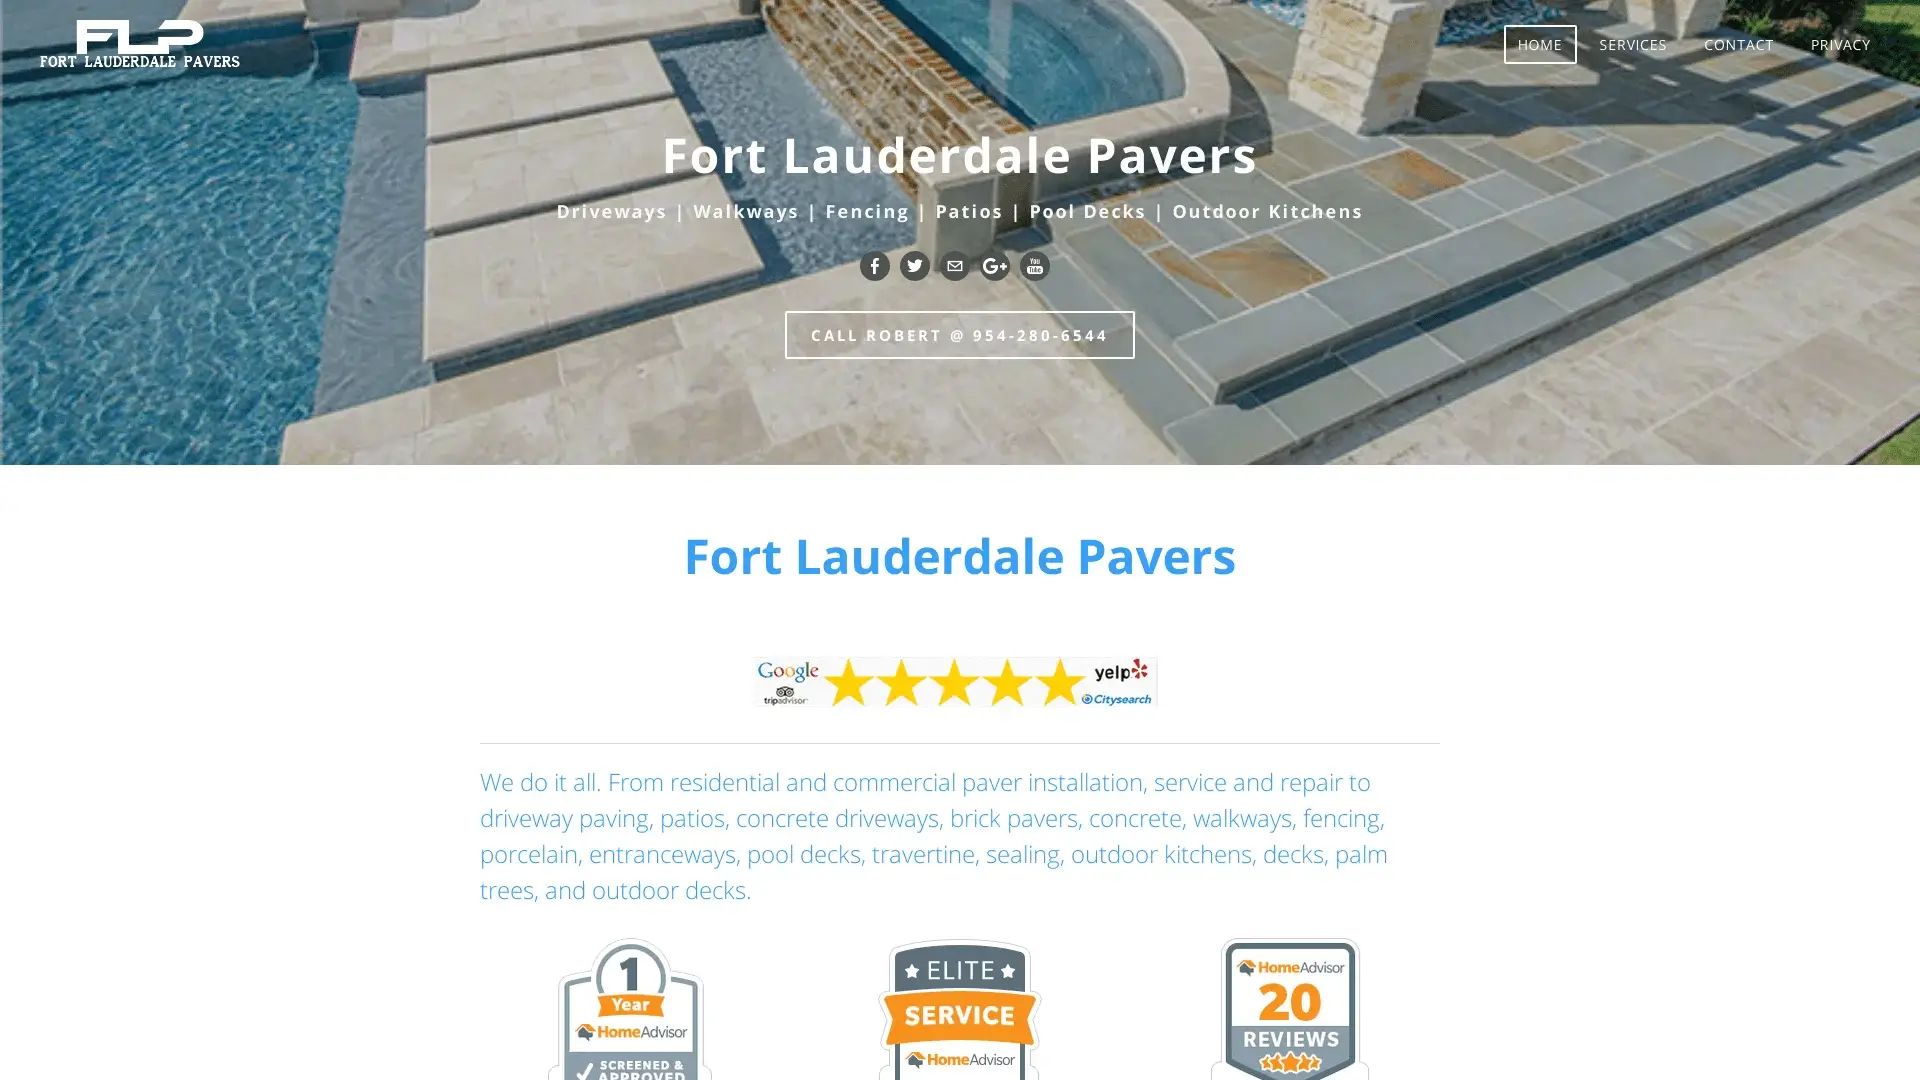 Pavers, Driveway Pavers, Patios, Pool Decks, Fort Lauderdale FL